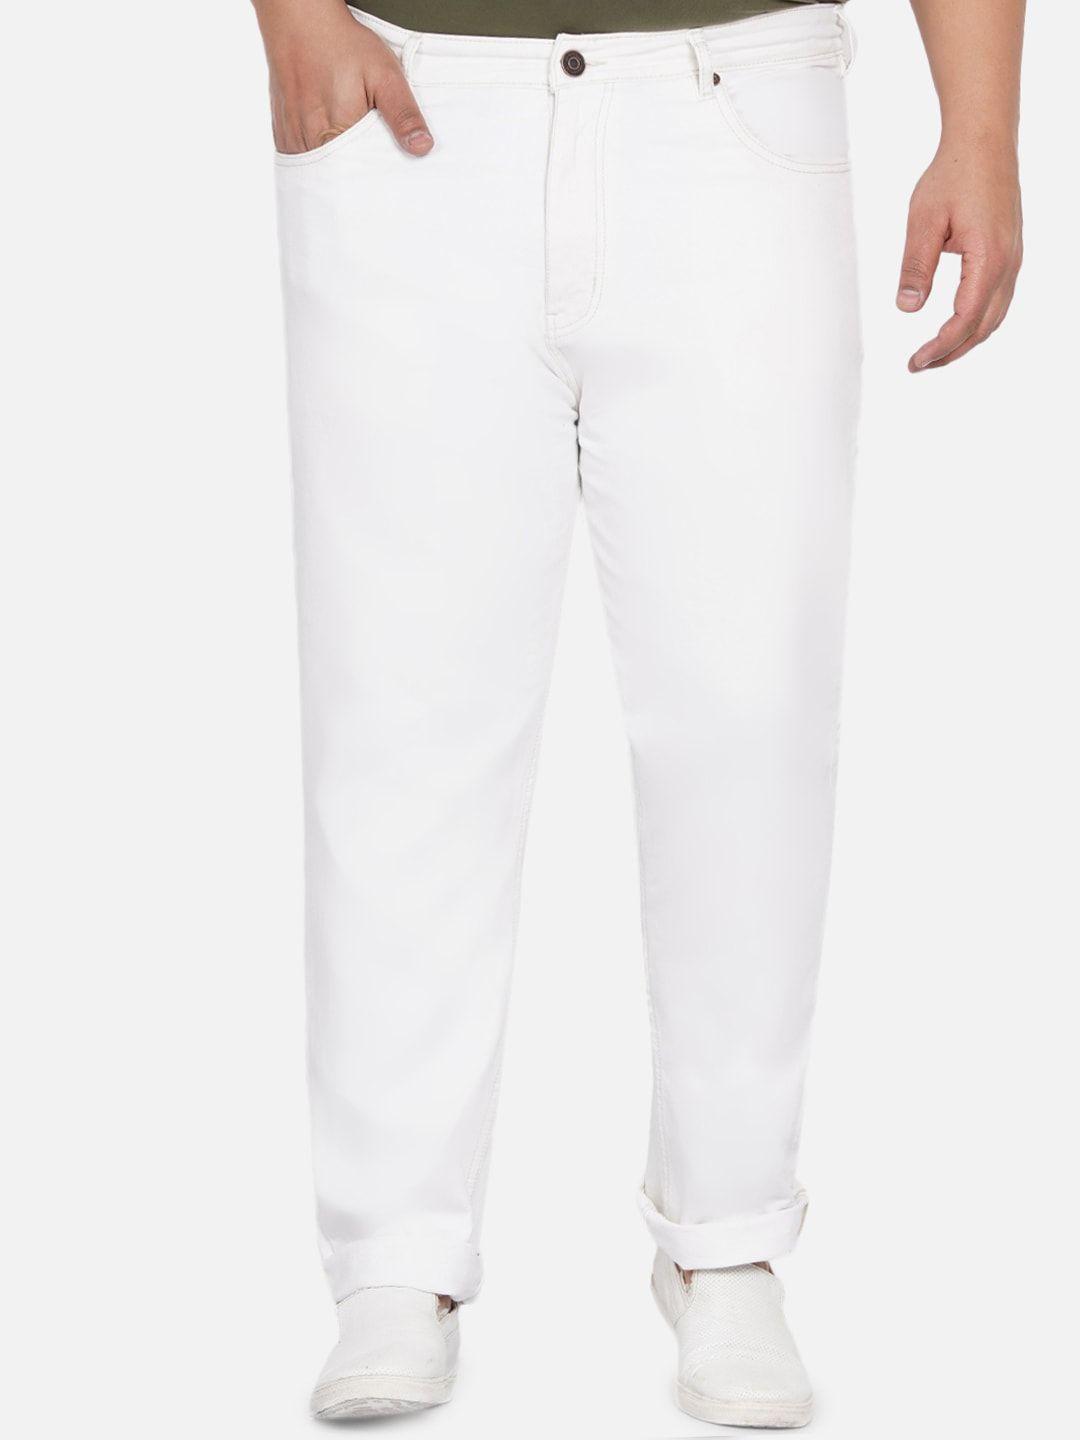 john-pride-plus-size-men-white-mildly-distressed-stretchable-jeans